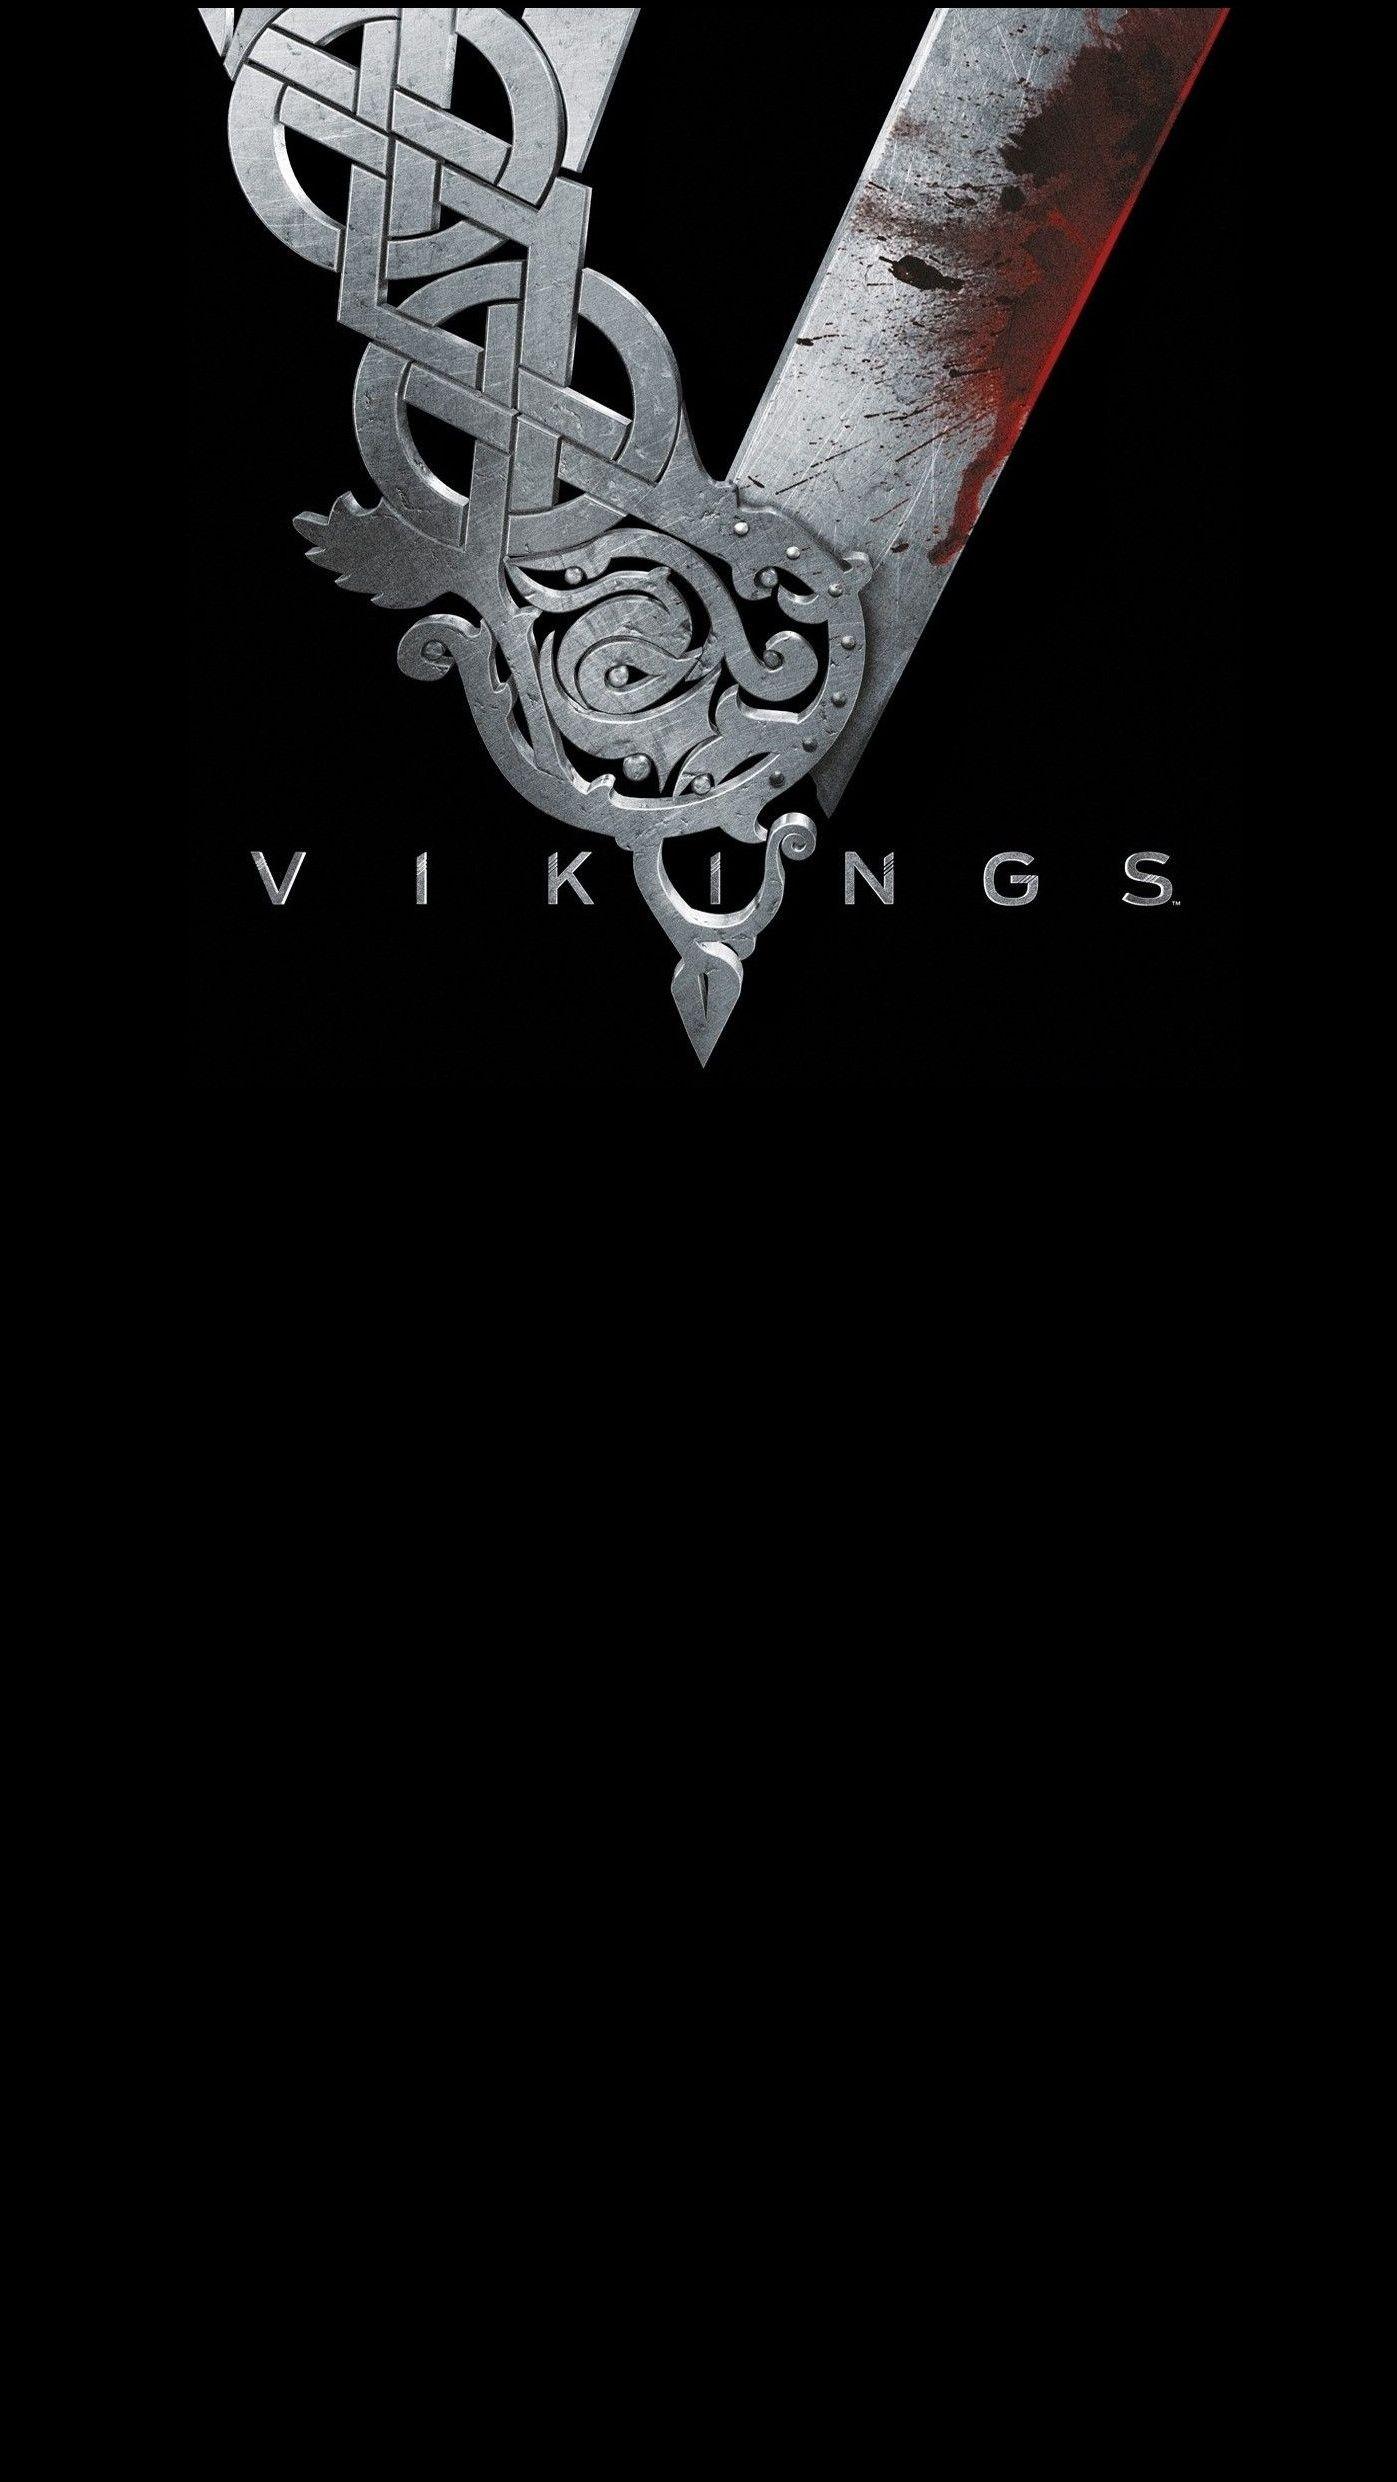 Fantasy warrior viking weapons axe blood dark skull wallpaper  1900x1200   28270  WallpaperUP